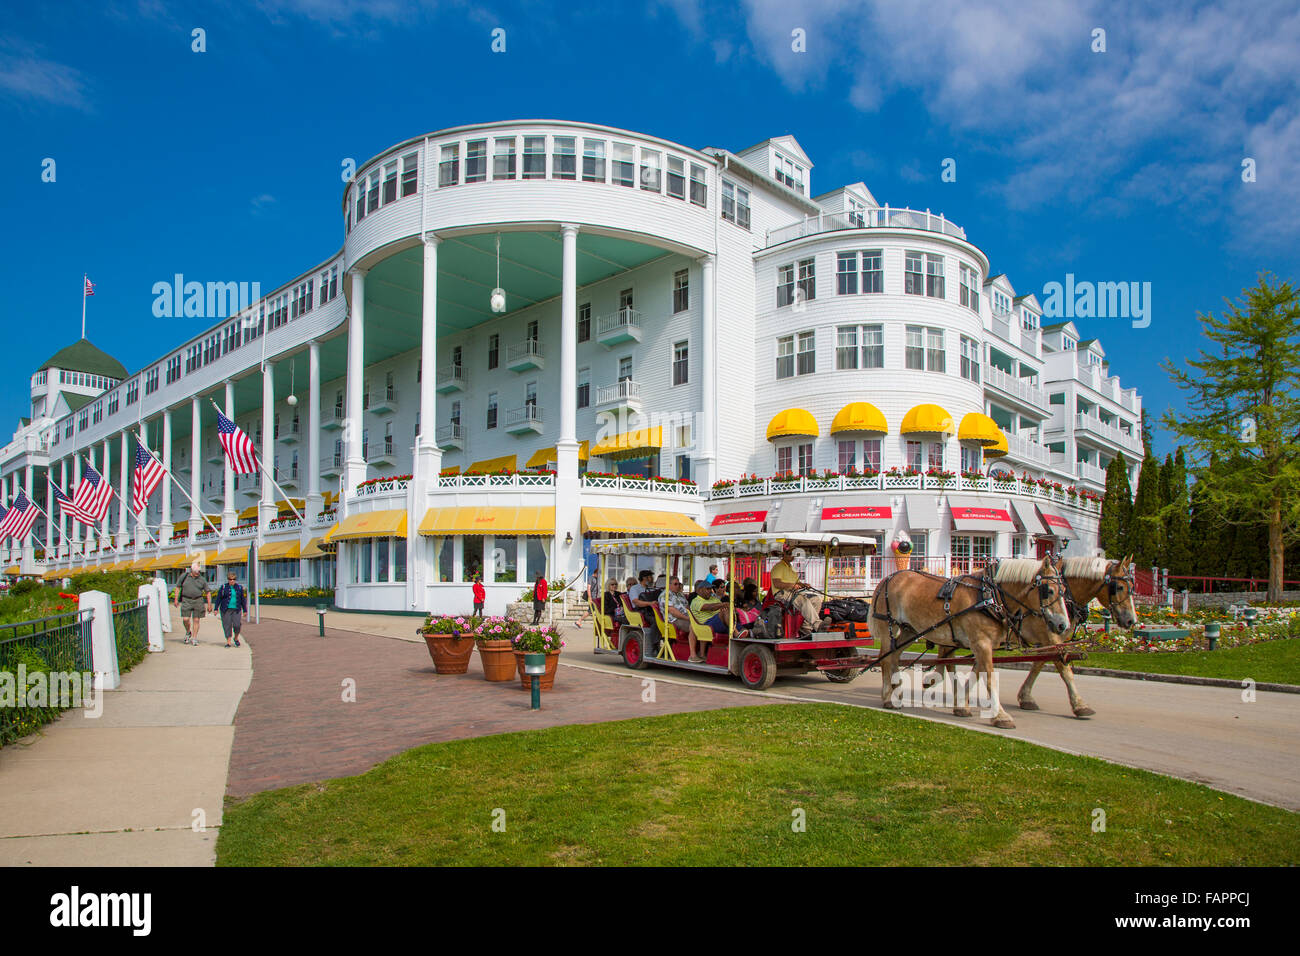 Historic Grand Hotel on resort island of Mackinac Island Michigan built in 1886-87 Stock Photo